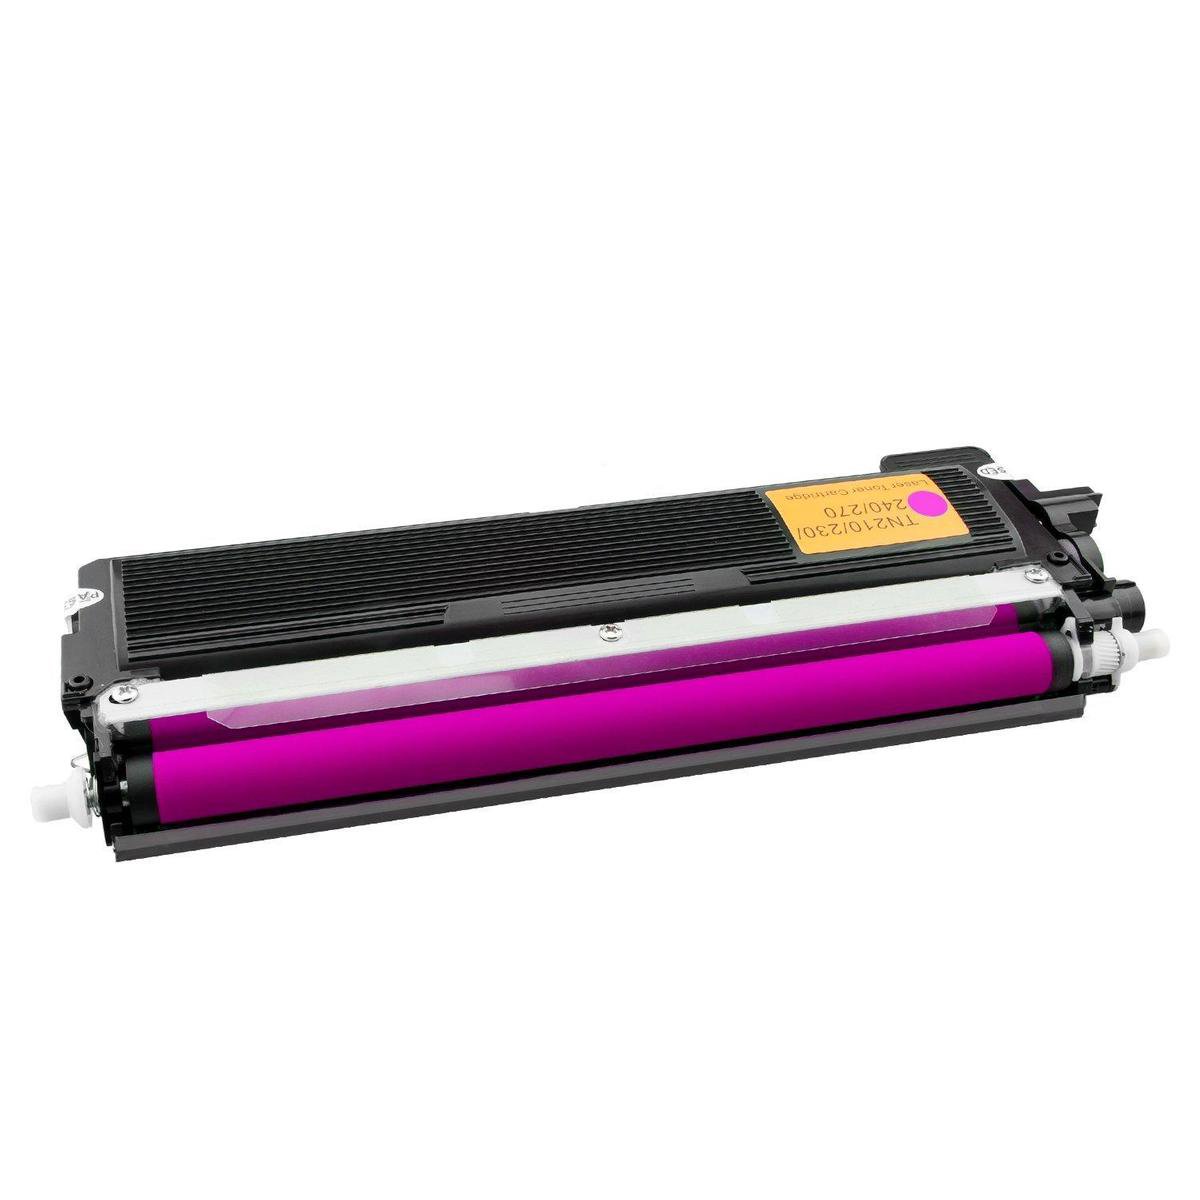 ActiveJet ATB-230MN toner voor brother printer; Brother TN-230M vervanging; Opperste; 1400 pagina's; magenta.